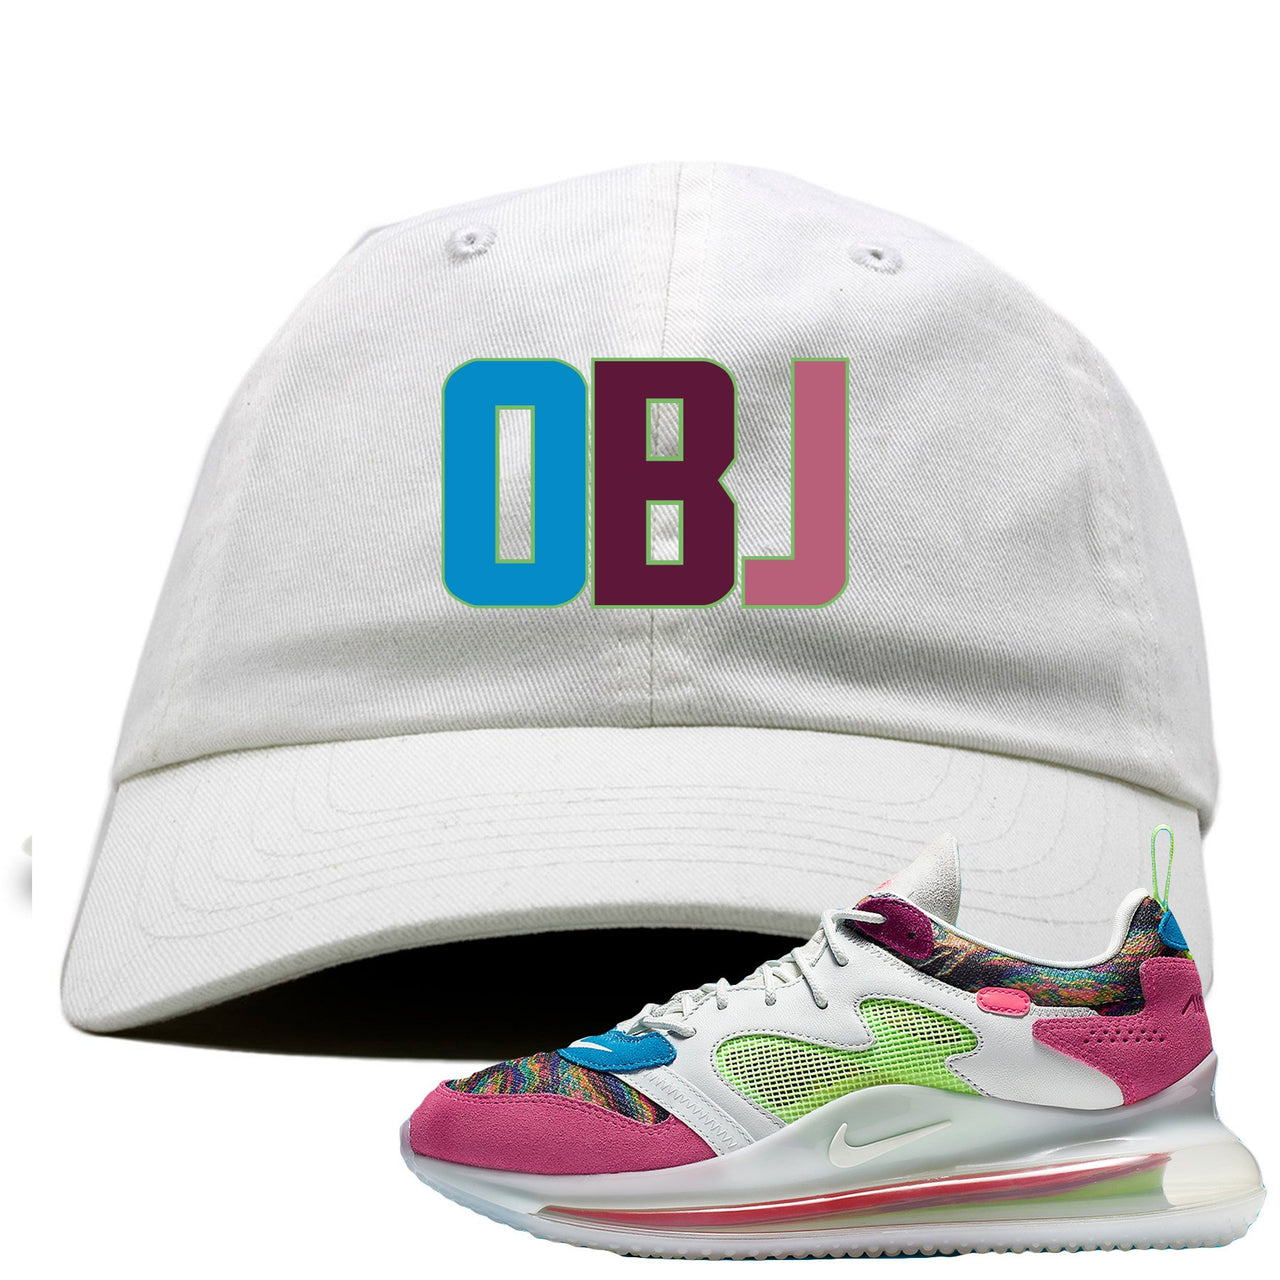 OBJ 720s Dad Hat | OBJ, White